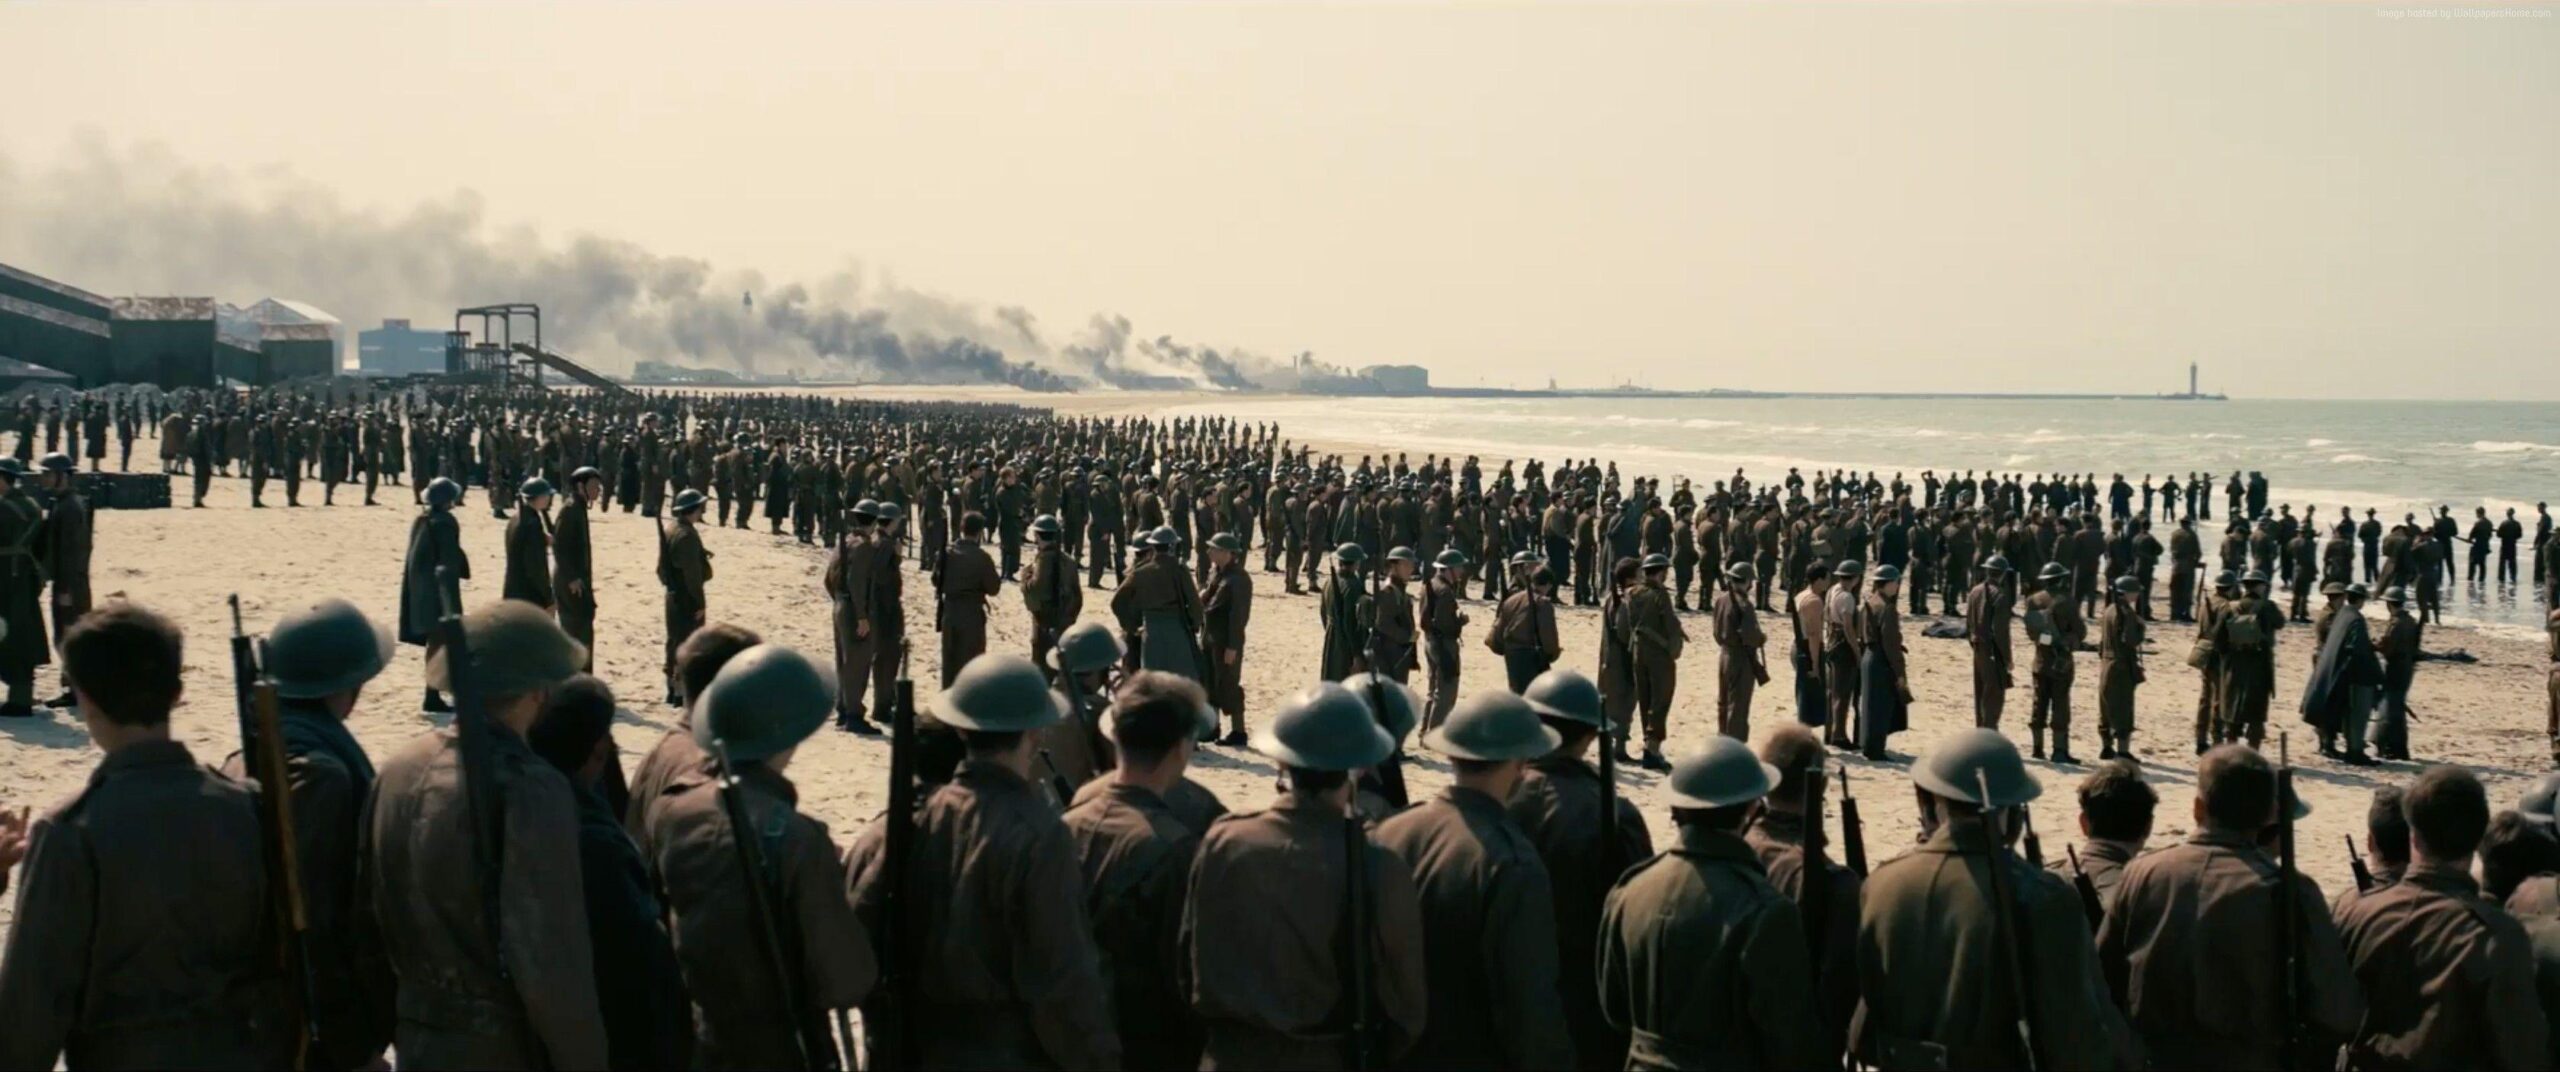 Dunkirk film Wallpapers